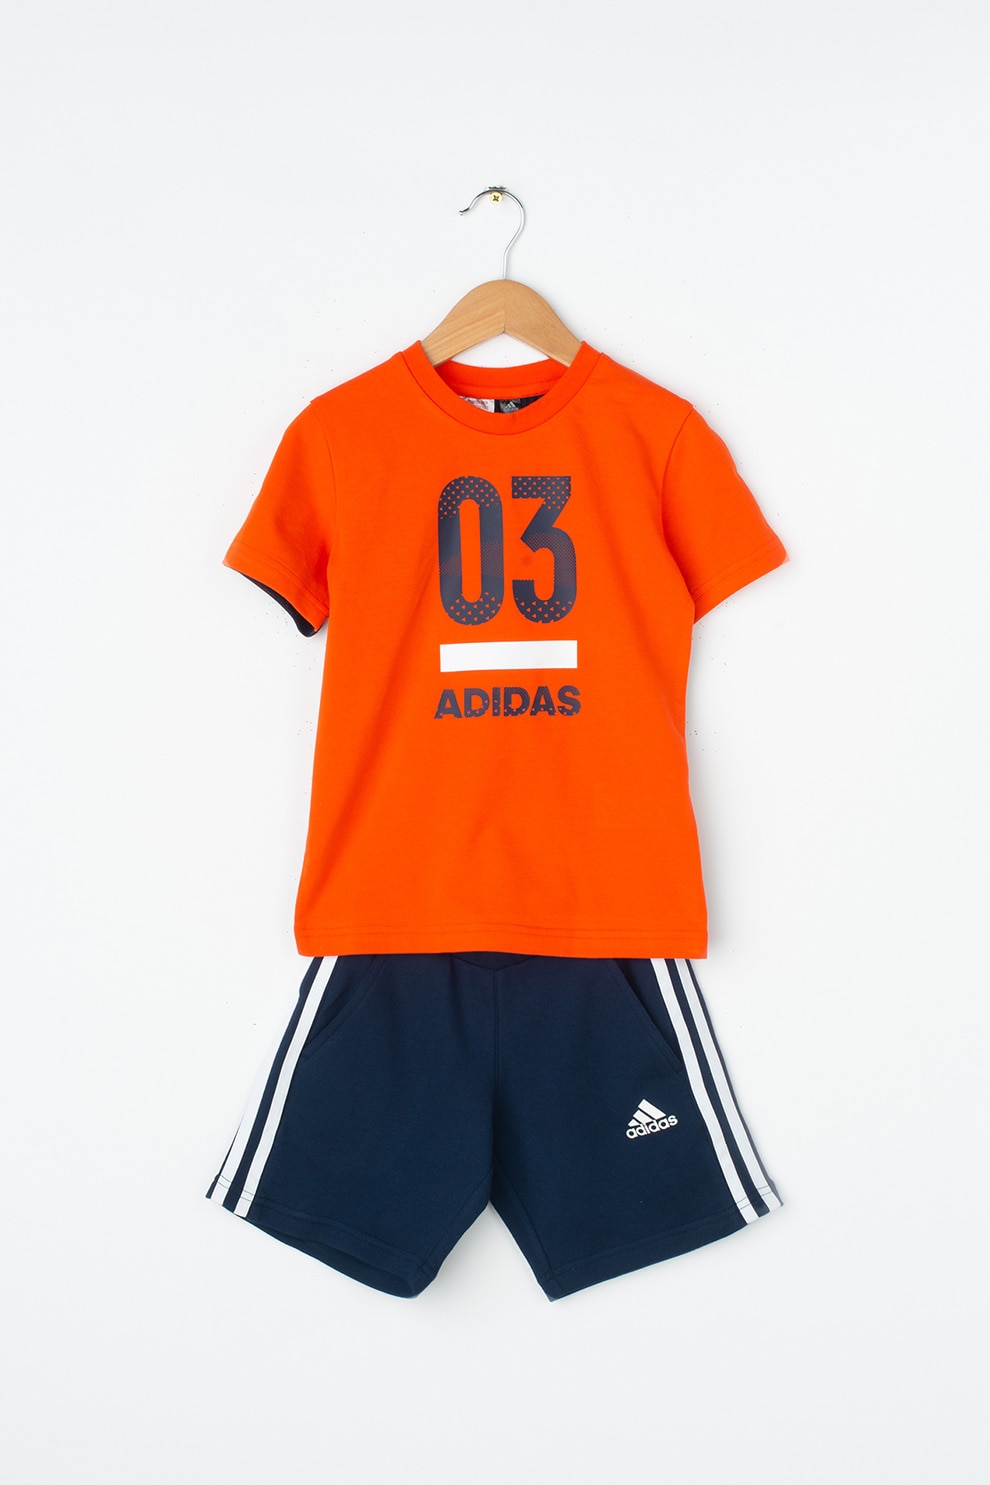 Adidas PERFORMANCE, Set de si pantaloni scurti, antrenament, Oranj/Bleumarin, 128 CM Standard - eMAG.ro